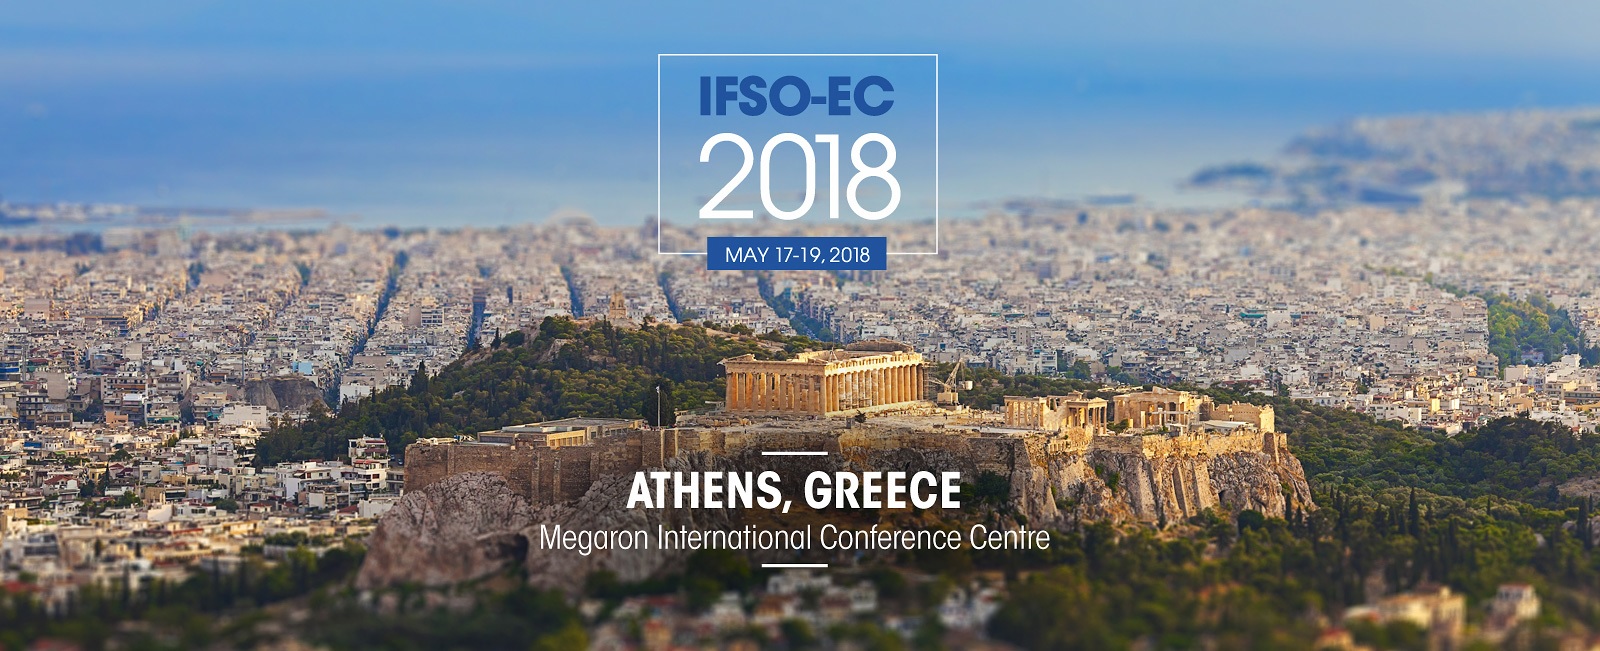 IFSO EC 2018 jpg